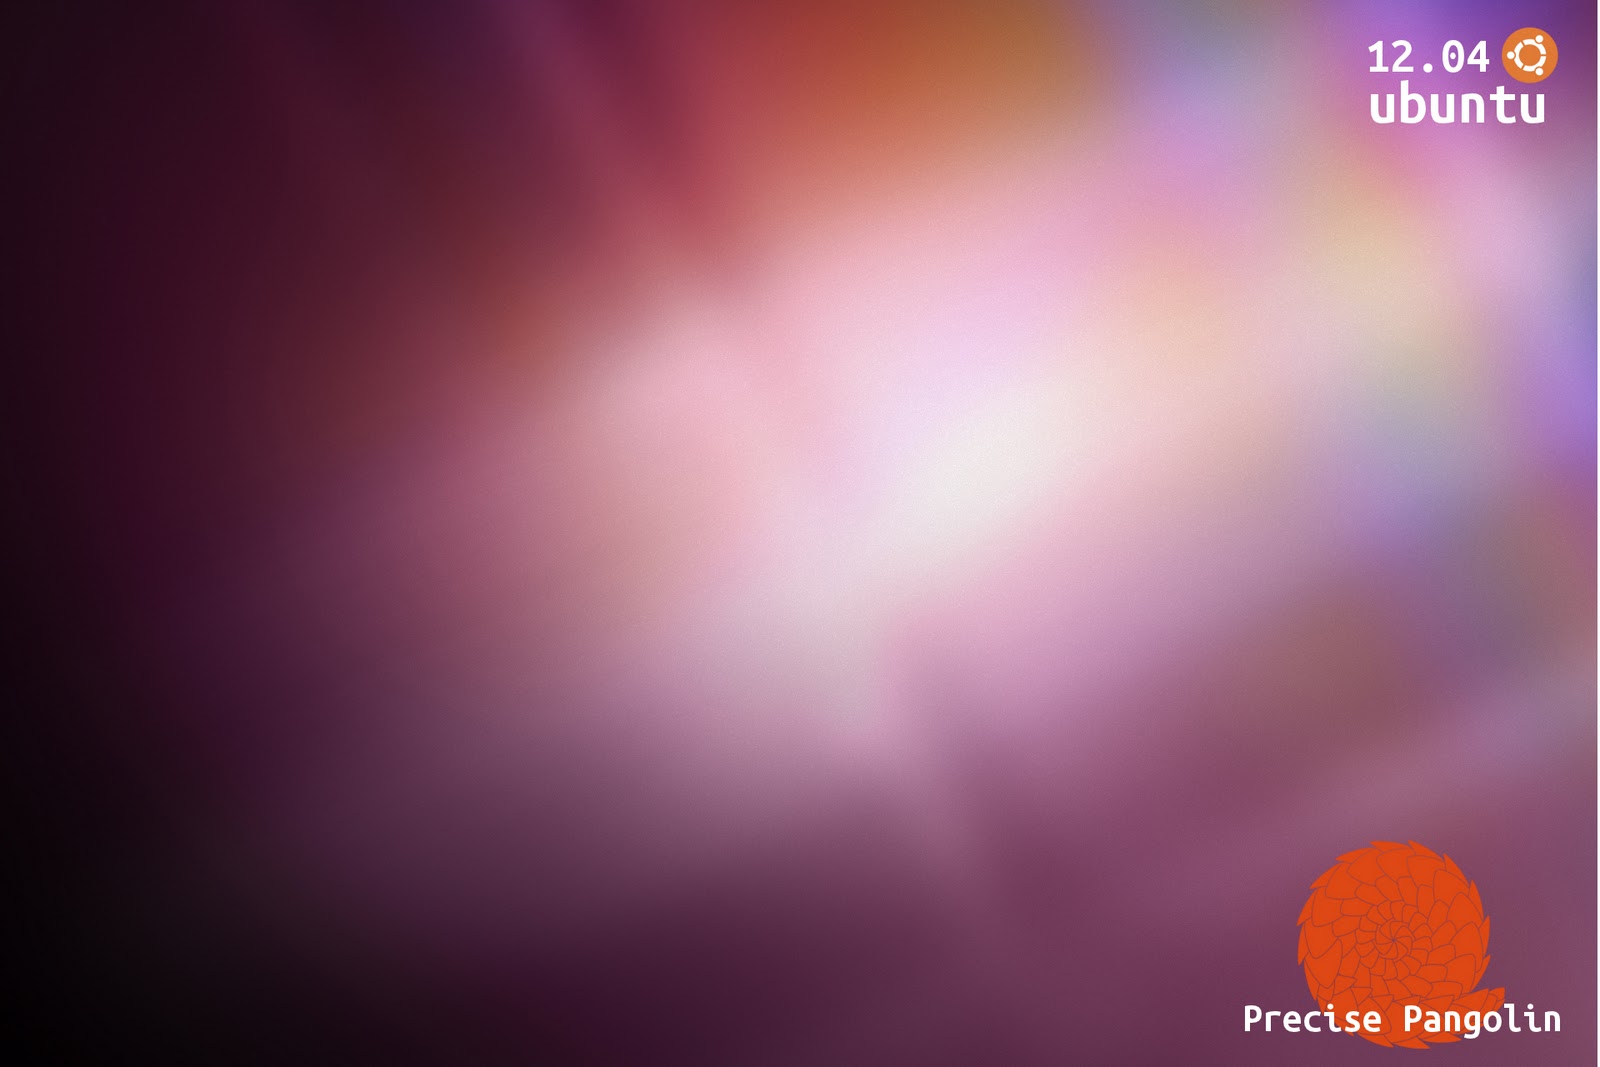 Ubuntu Precise Pangolin Desktop Wallpaper Motive